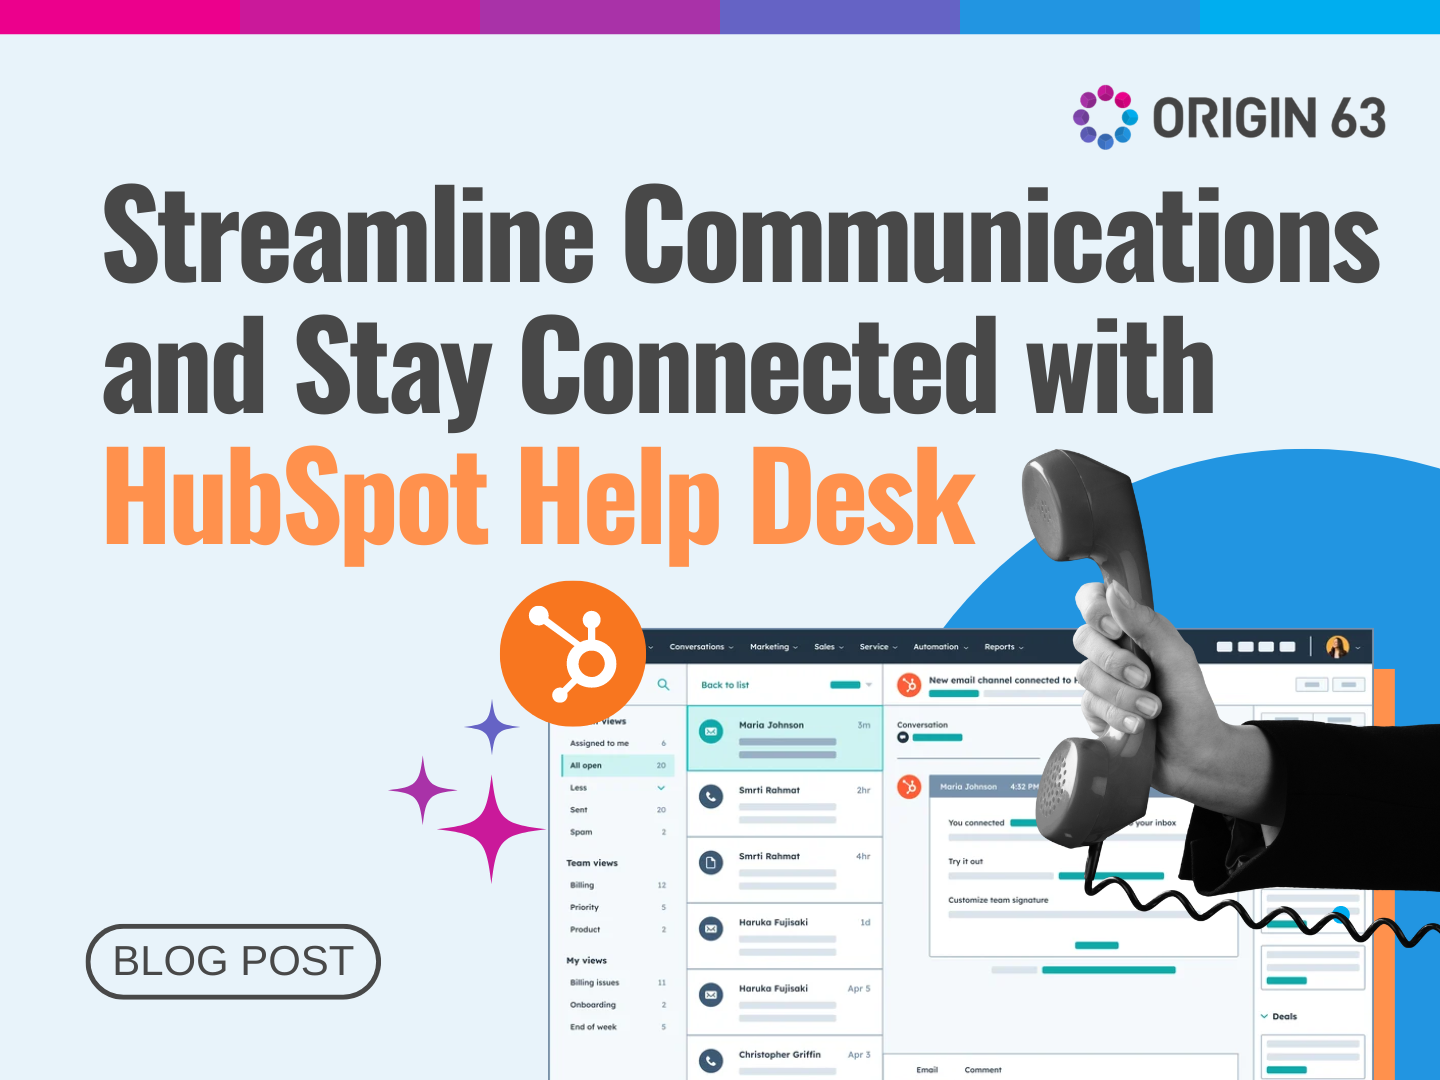 Learn how HubSpot's Help Desk centralizes communication, improves teamwork, and enhances customer satisfaction.